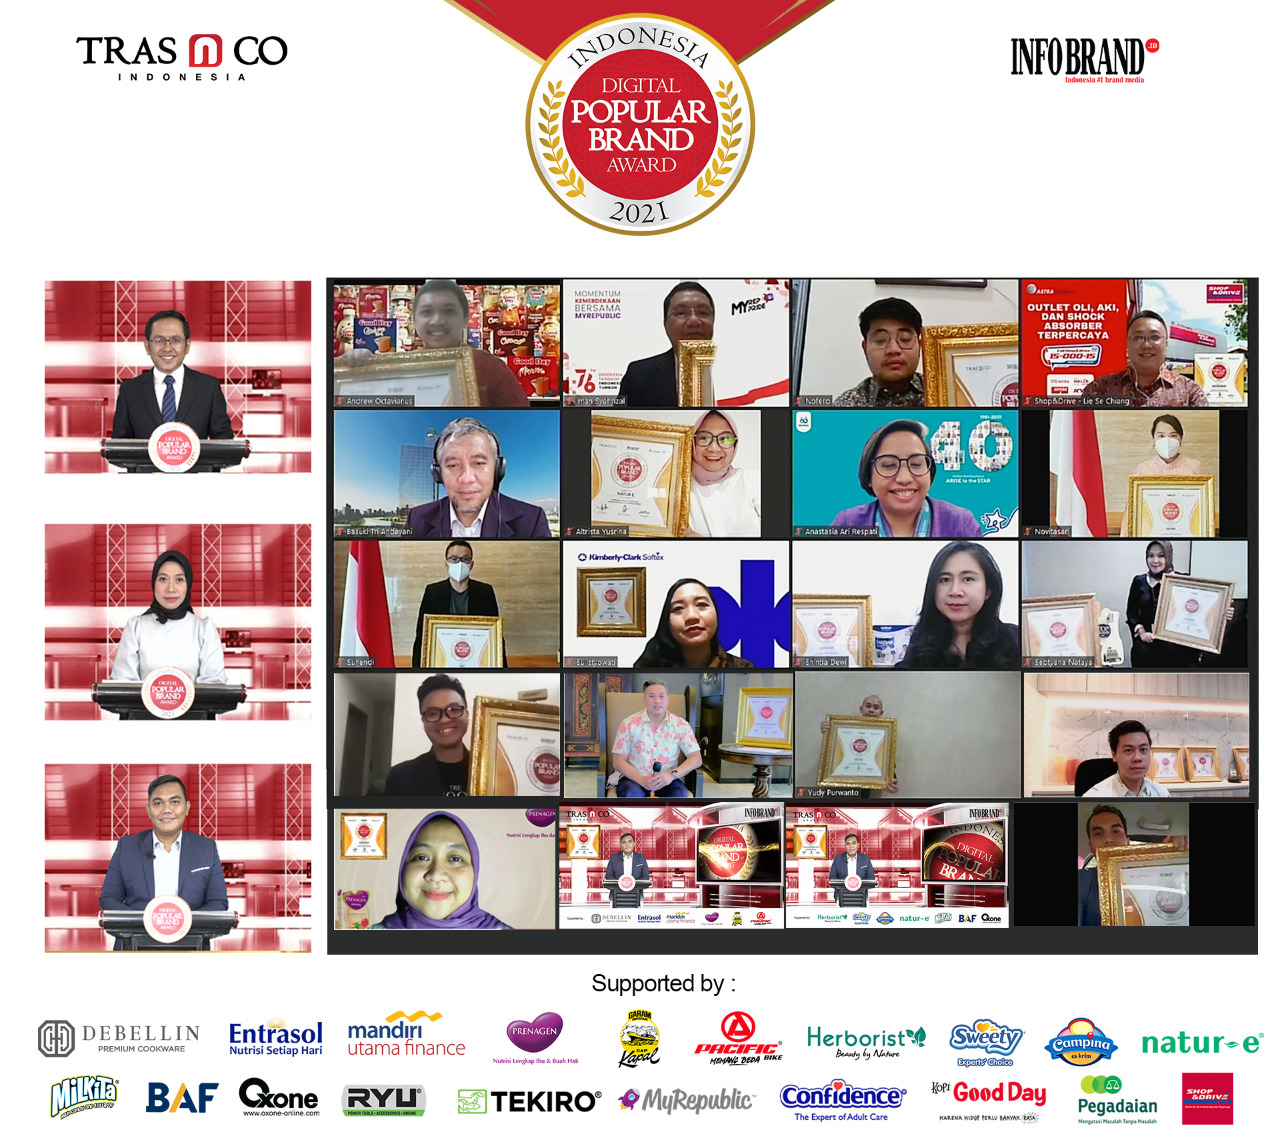 Indonesia Digital Popular Brand Award 2021